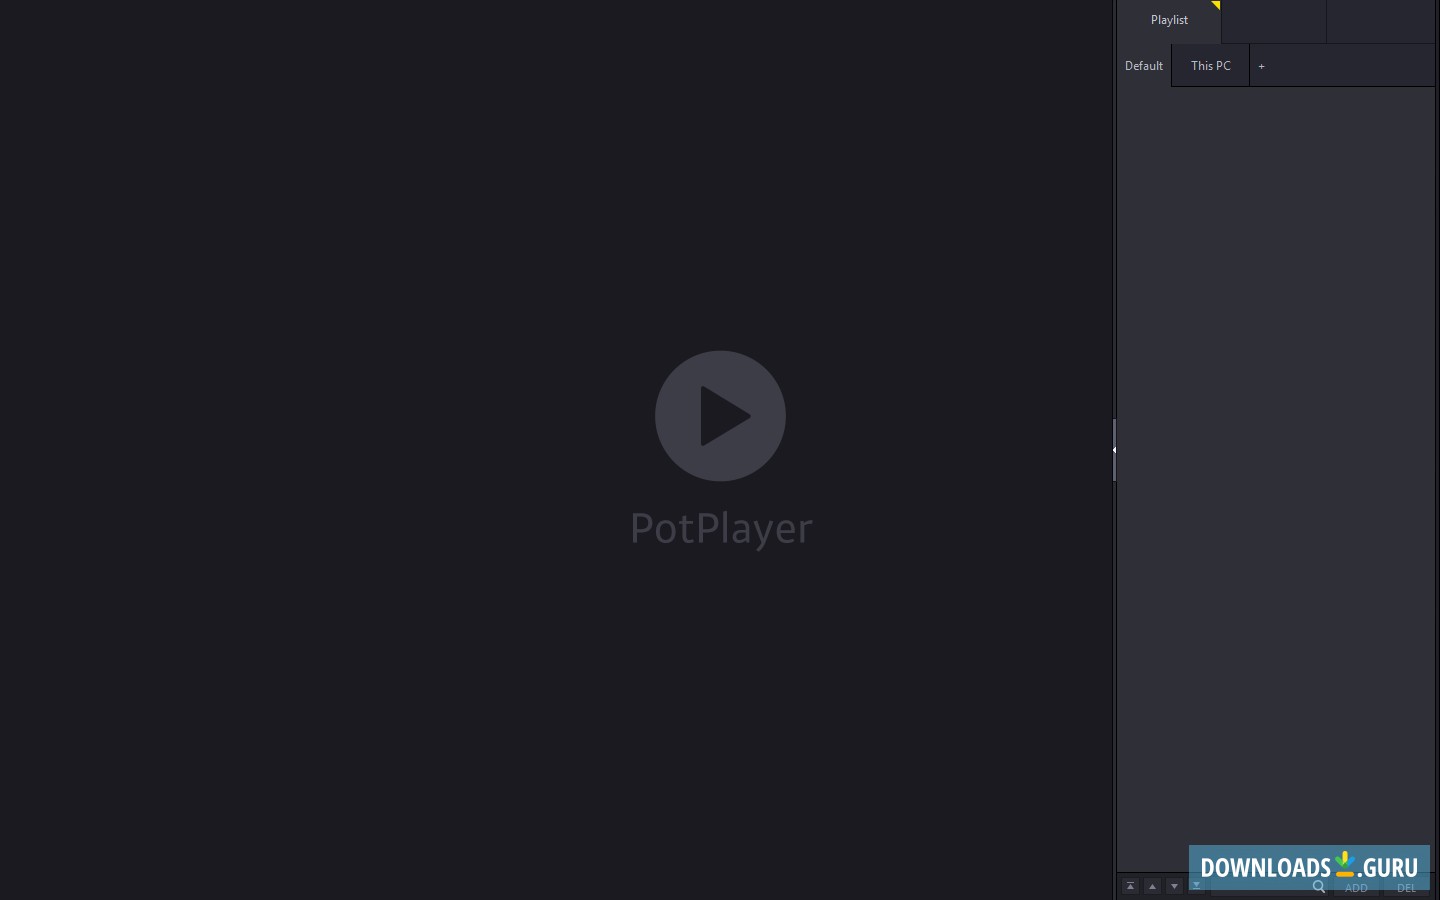 potplayer latest version free download for windows 10